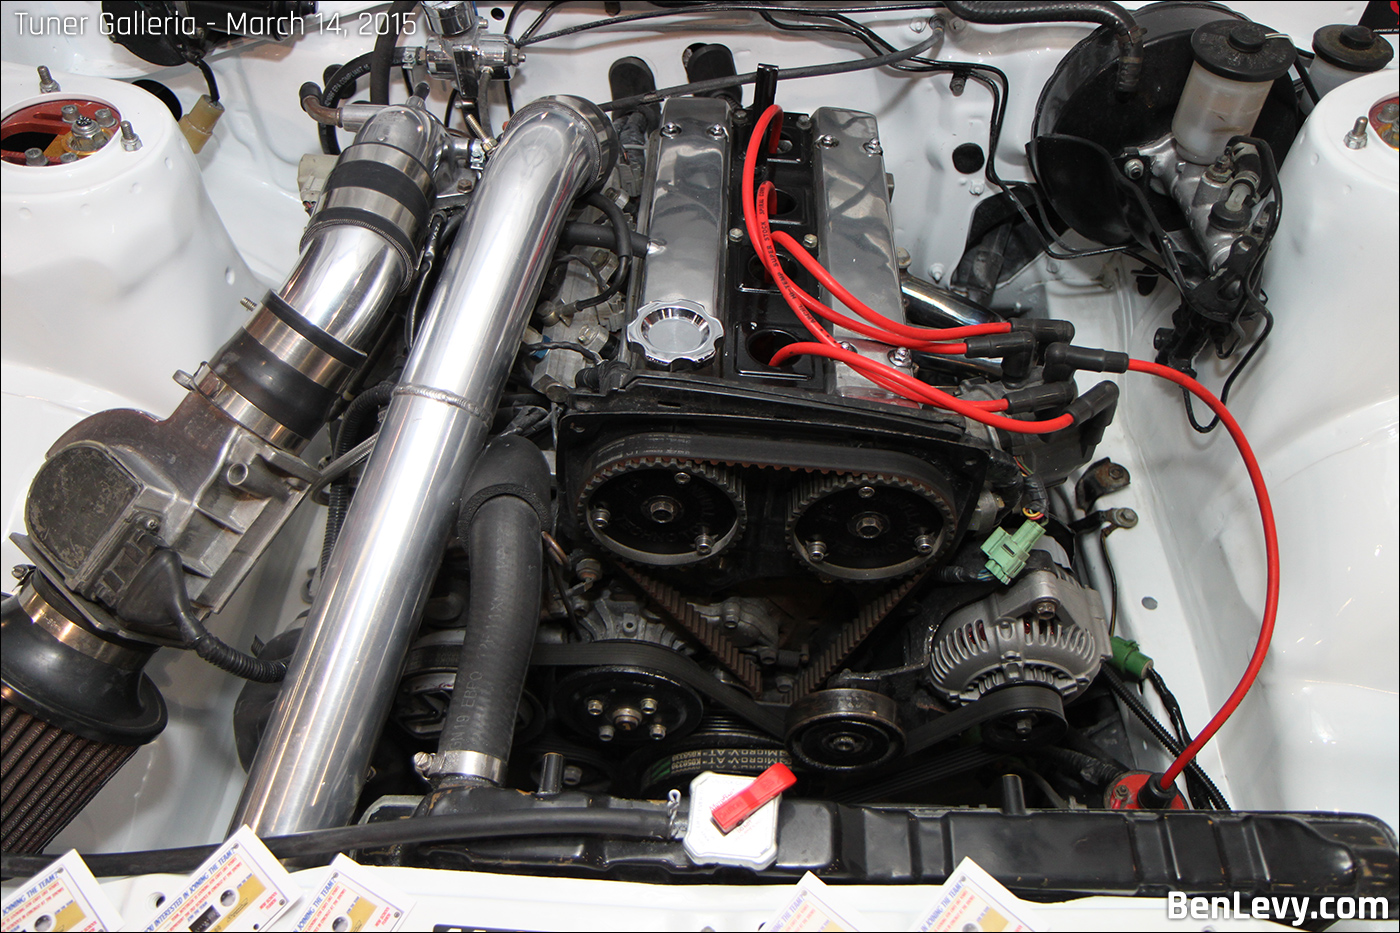 Modded Toyota Corolla engine